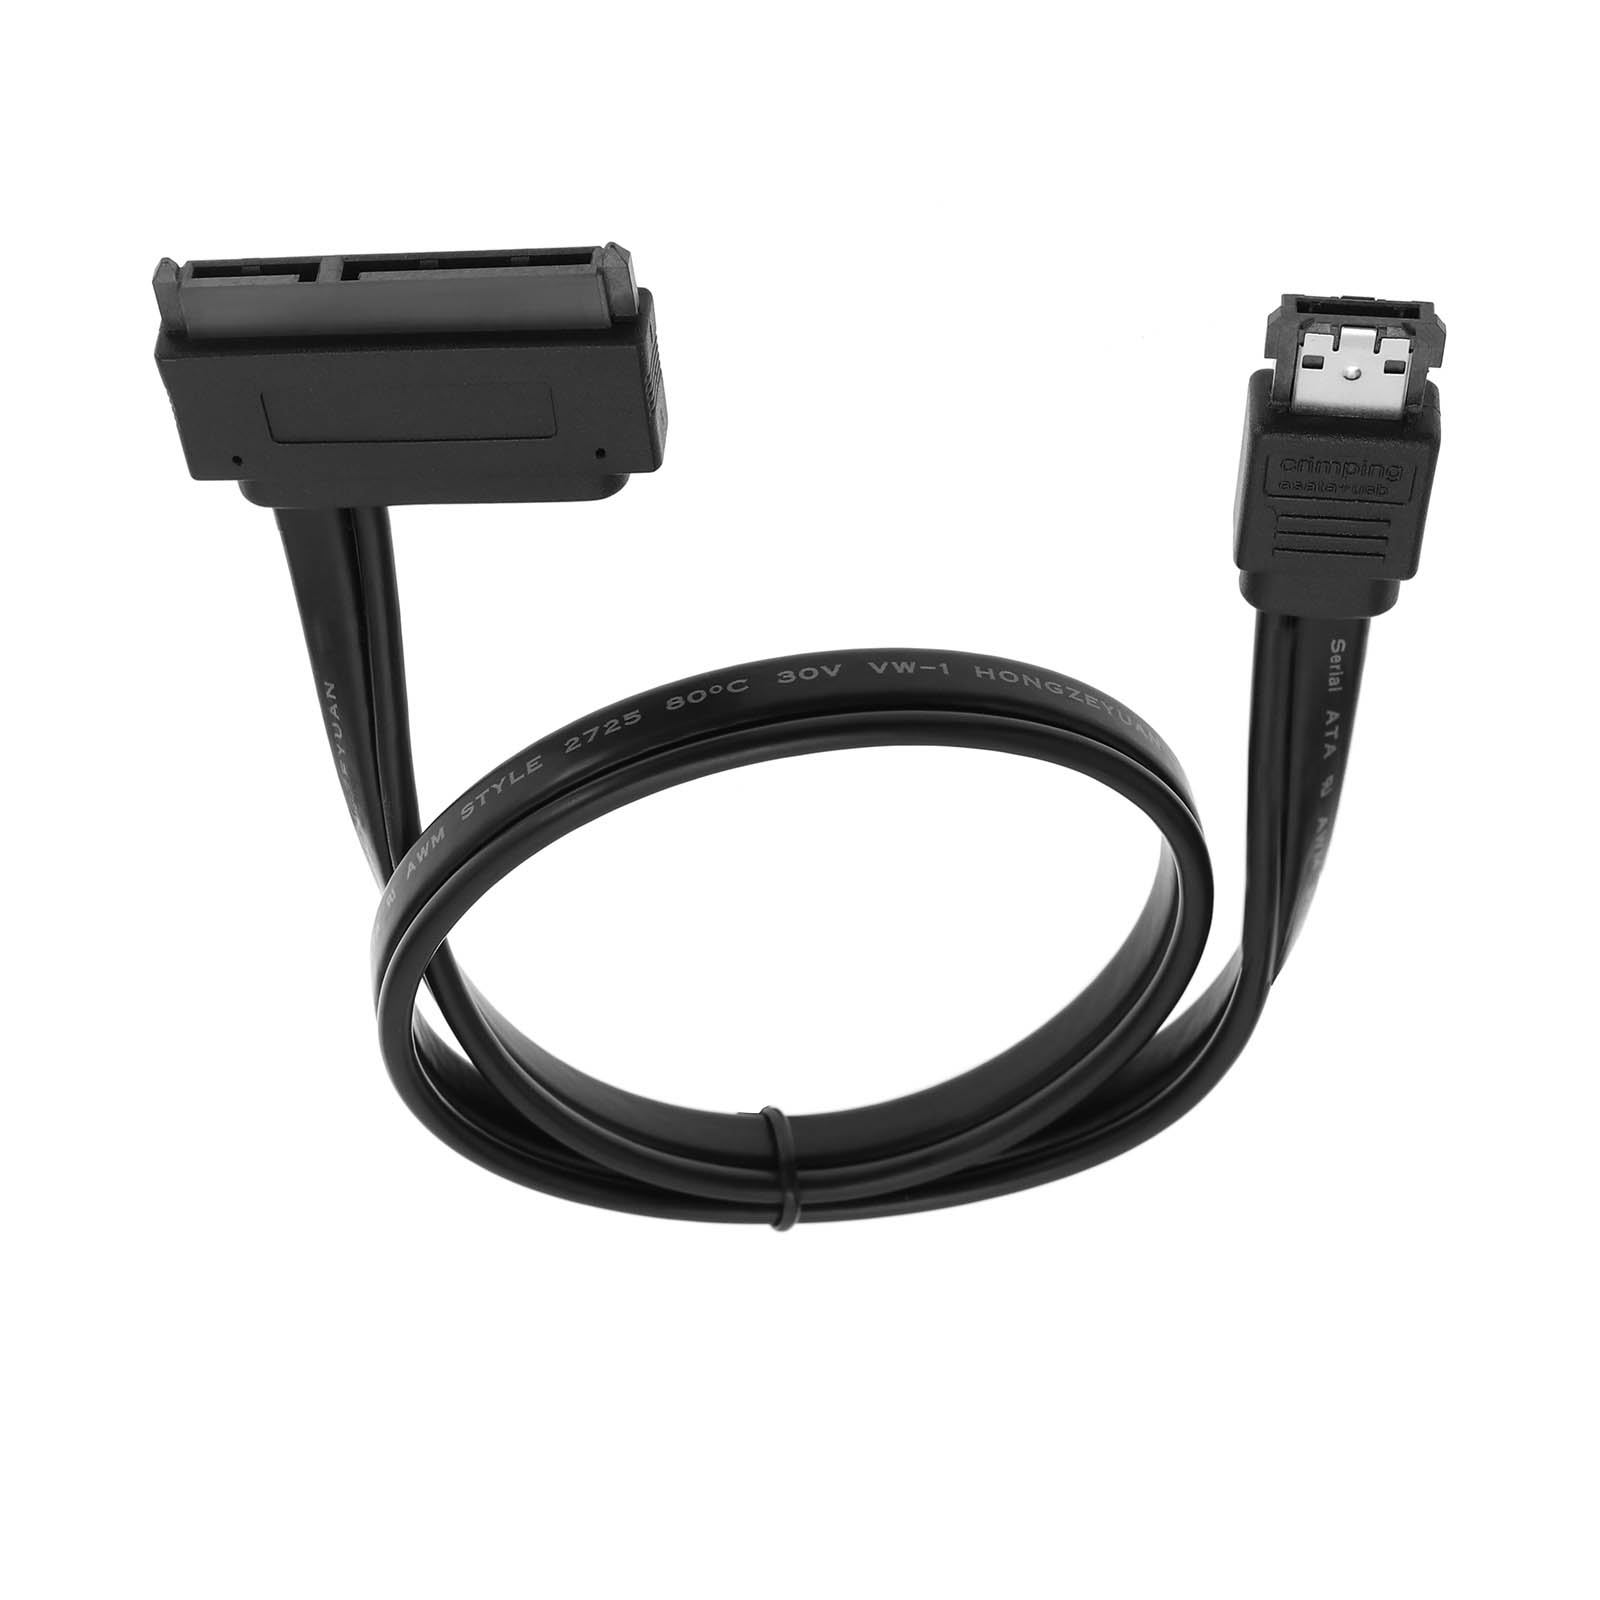 Power ESATA Cable eSATAp ESATA USB 2.0 Combo to 22 Pin SATA Cable 50cm